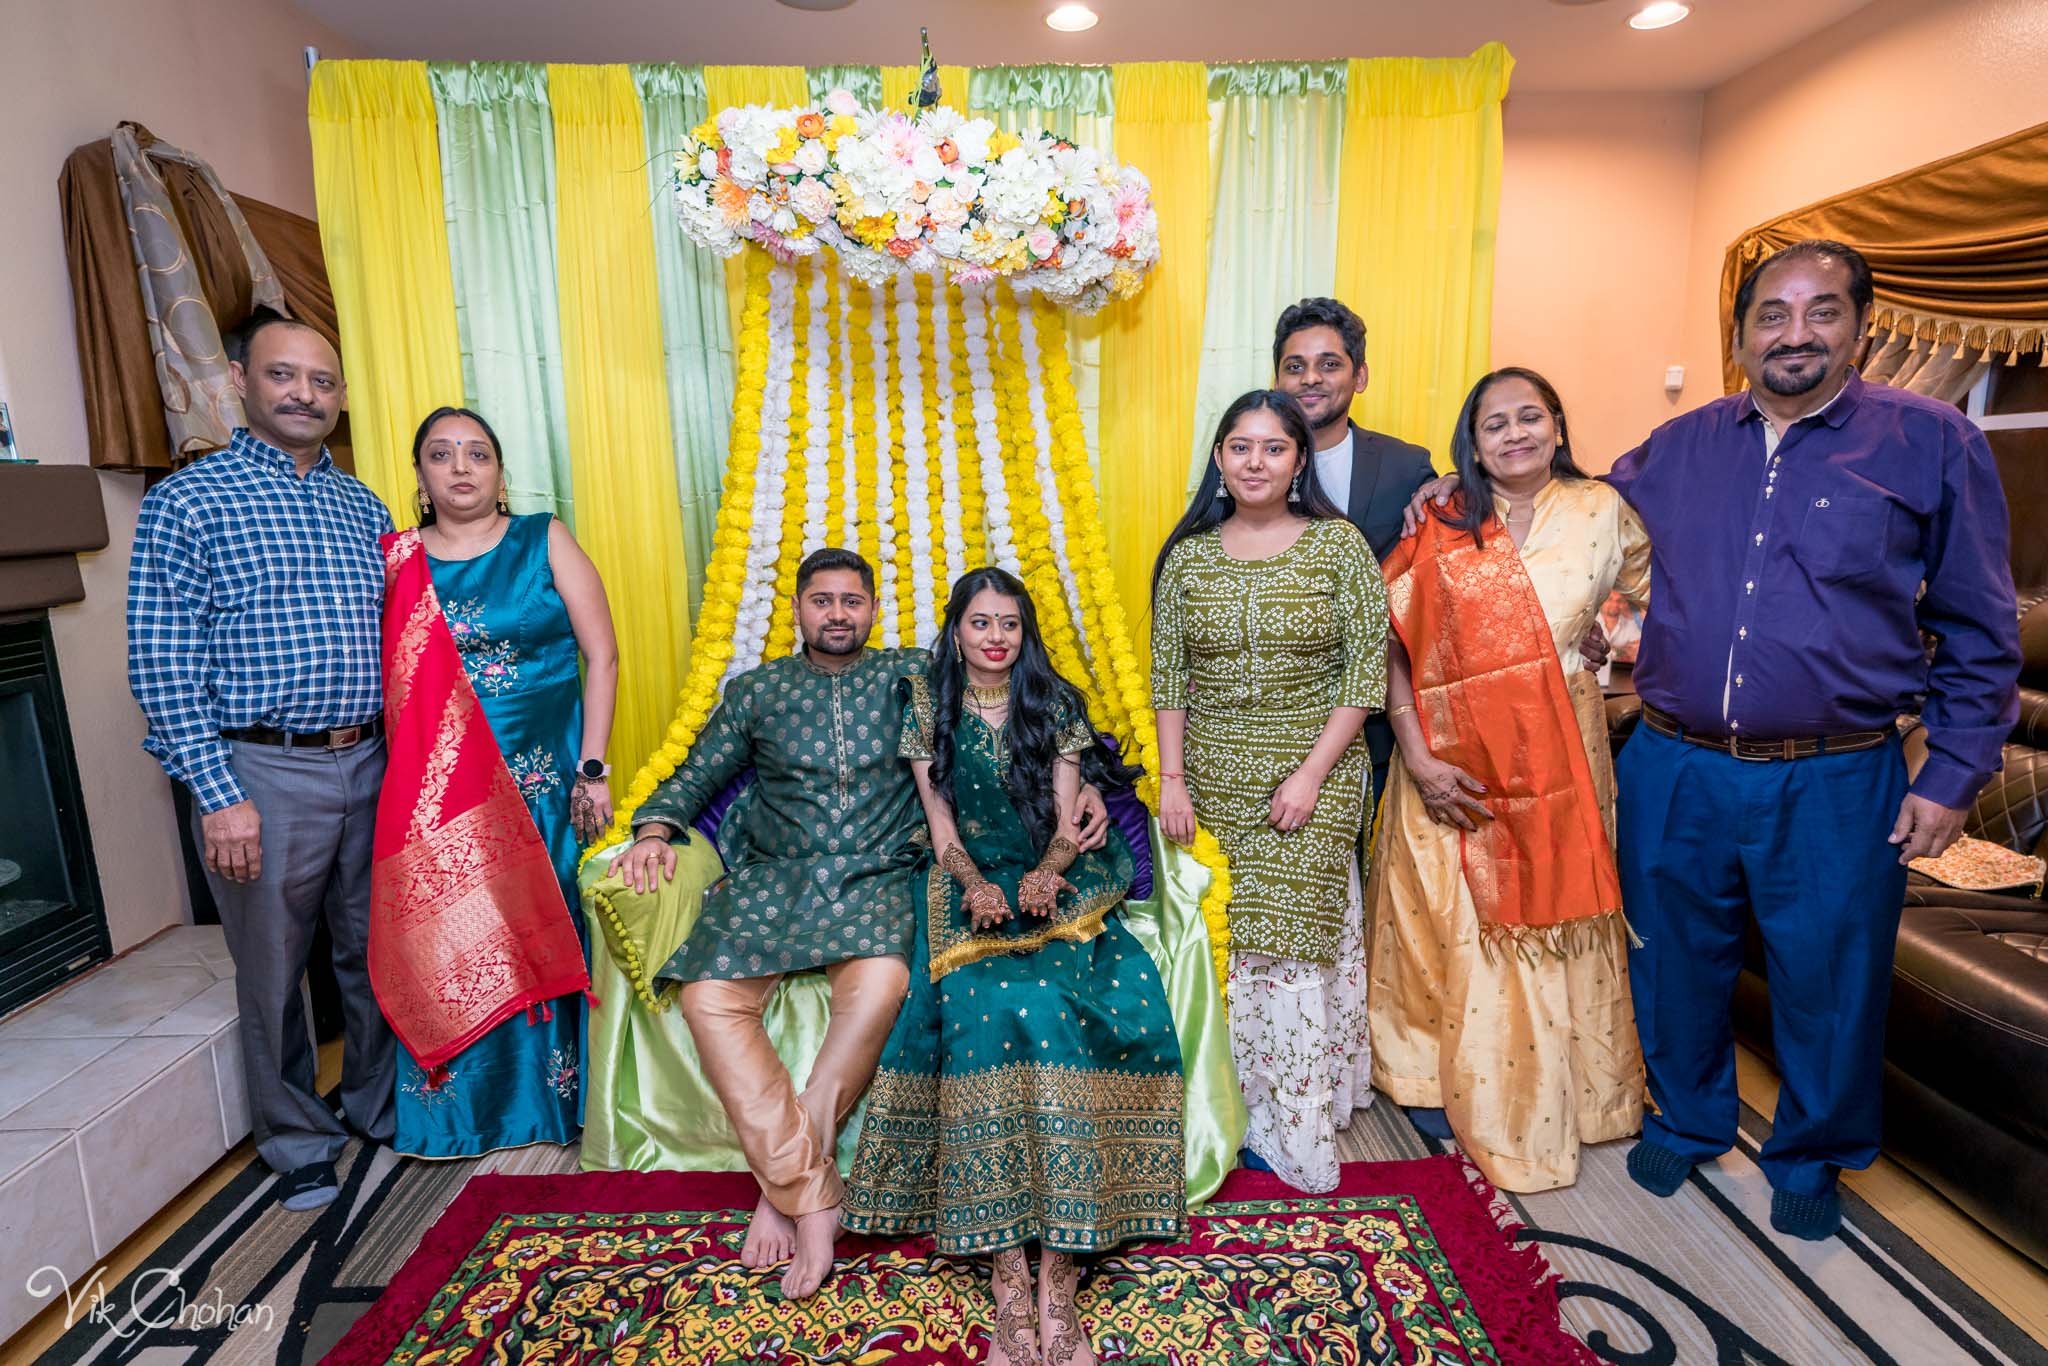 2022-02-03-Hely-&-Parth-Mendi-Indian-Wedding-Vik-Chohan-Photography-Photo-Booth-Social-Media-VCP-160.jpg